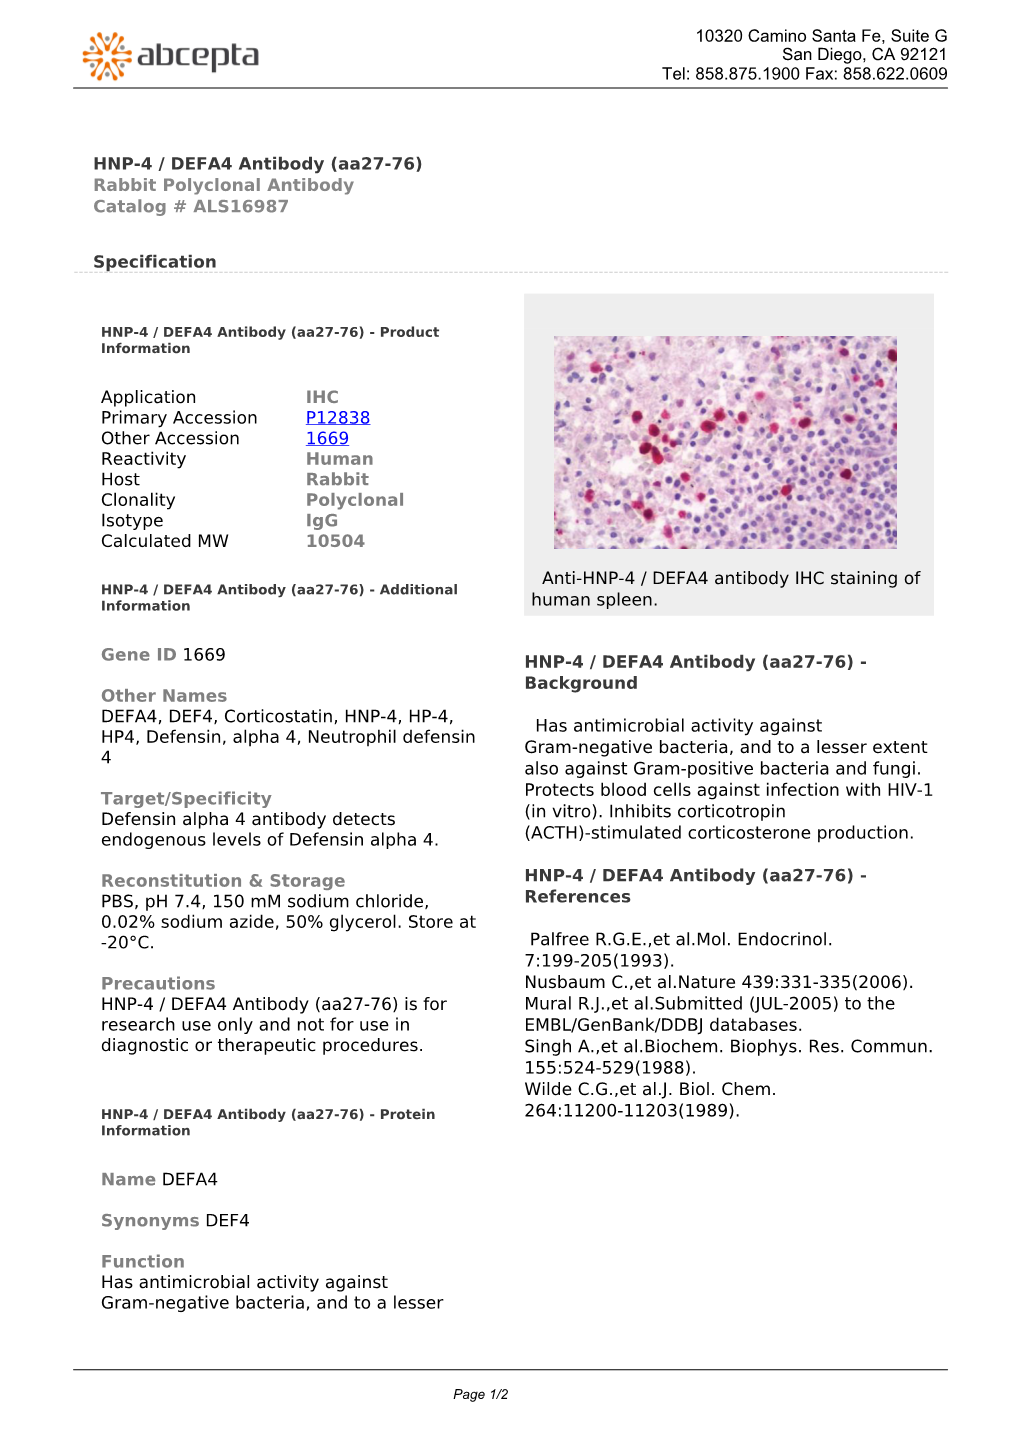 HNP-4 / DEFA4 Antibody (Aa27-76) Rabbit Polyclonal Antibody Catalog # ALS16987